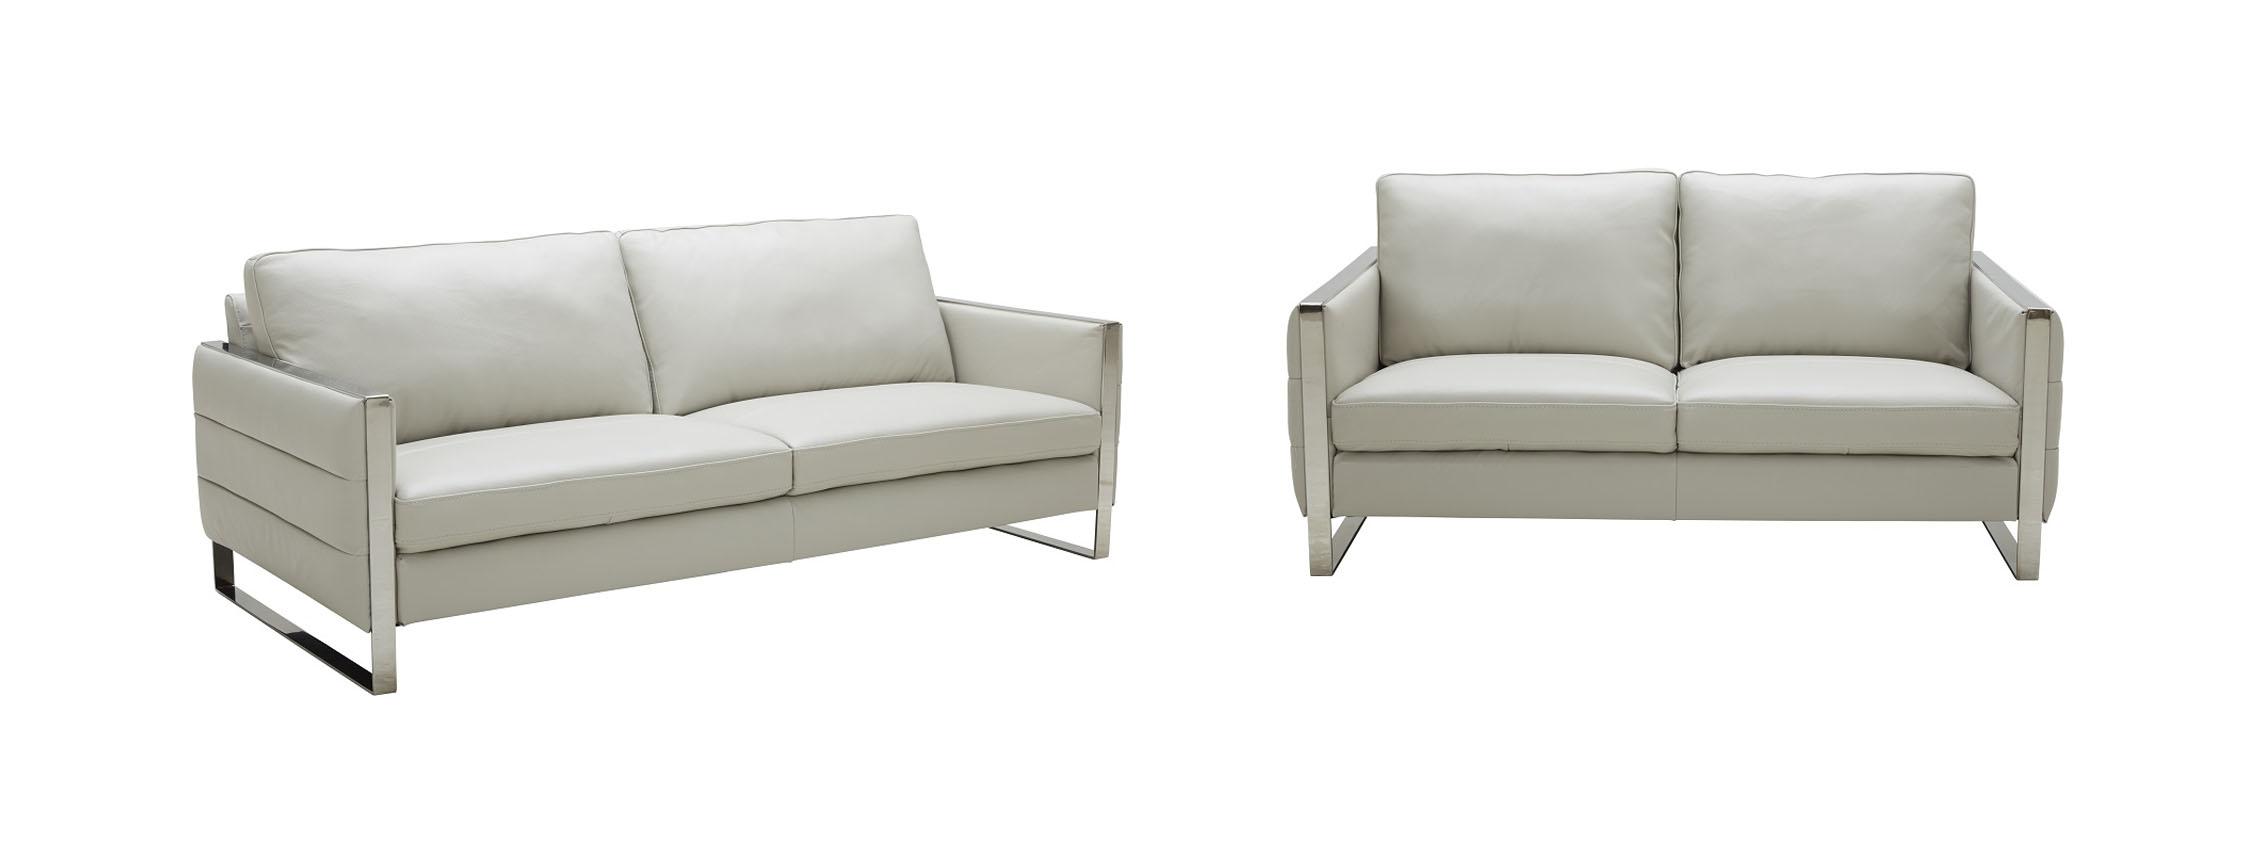 Contemporary, Modern Sofa and Loveseat Set Constantin SKU18723 -Set-2 in Light Gray Italian Leather